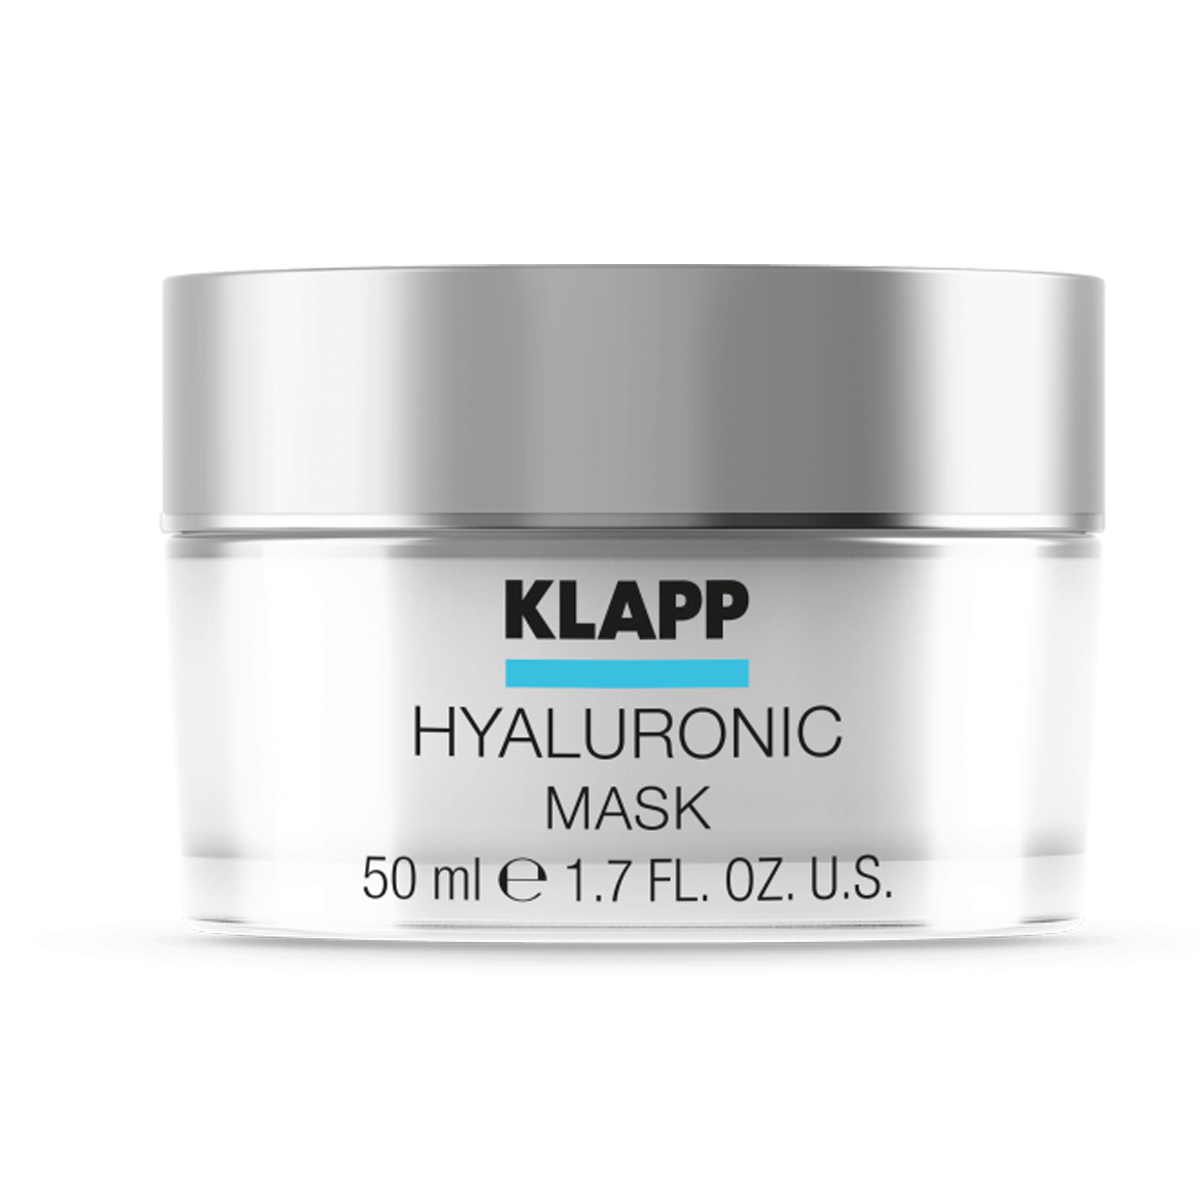 KLAPP Hyaluronic Mask 50 ml